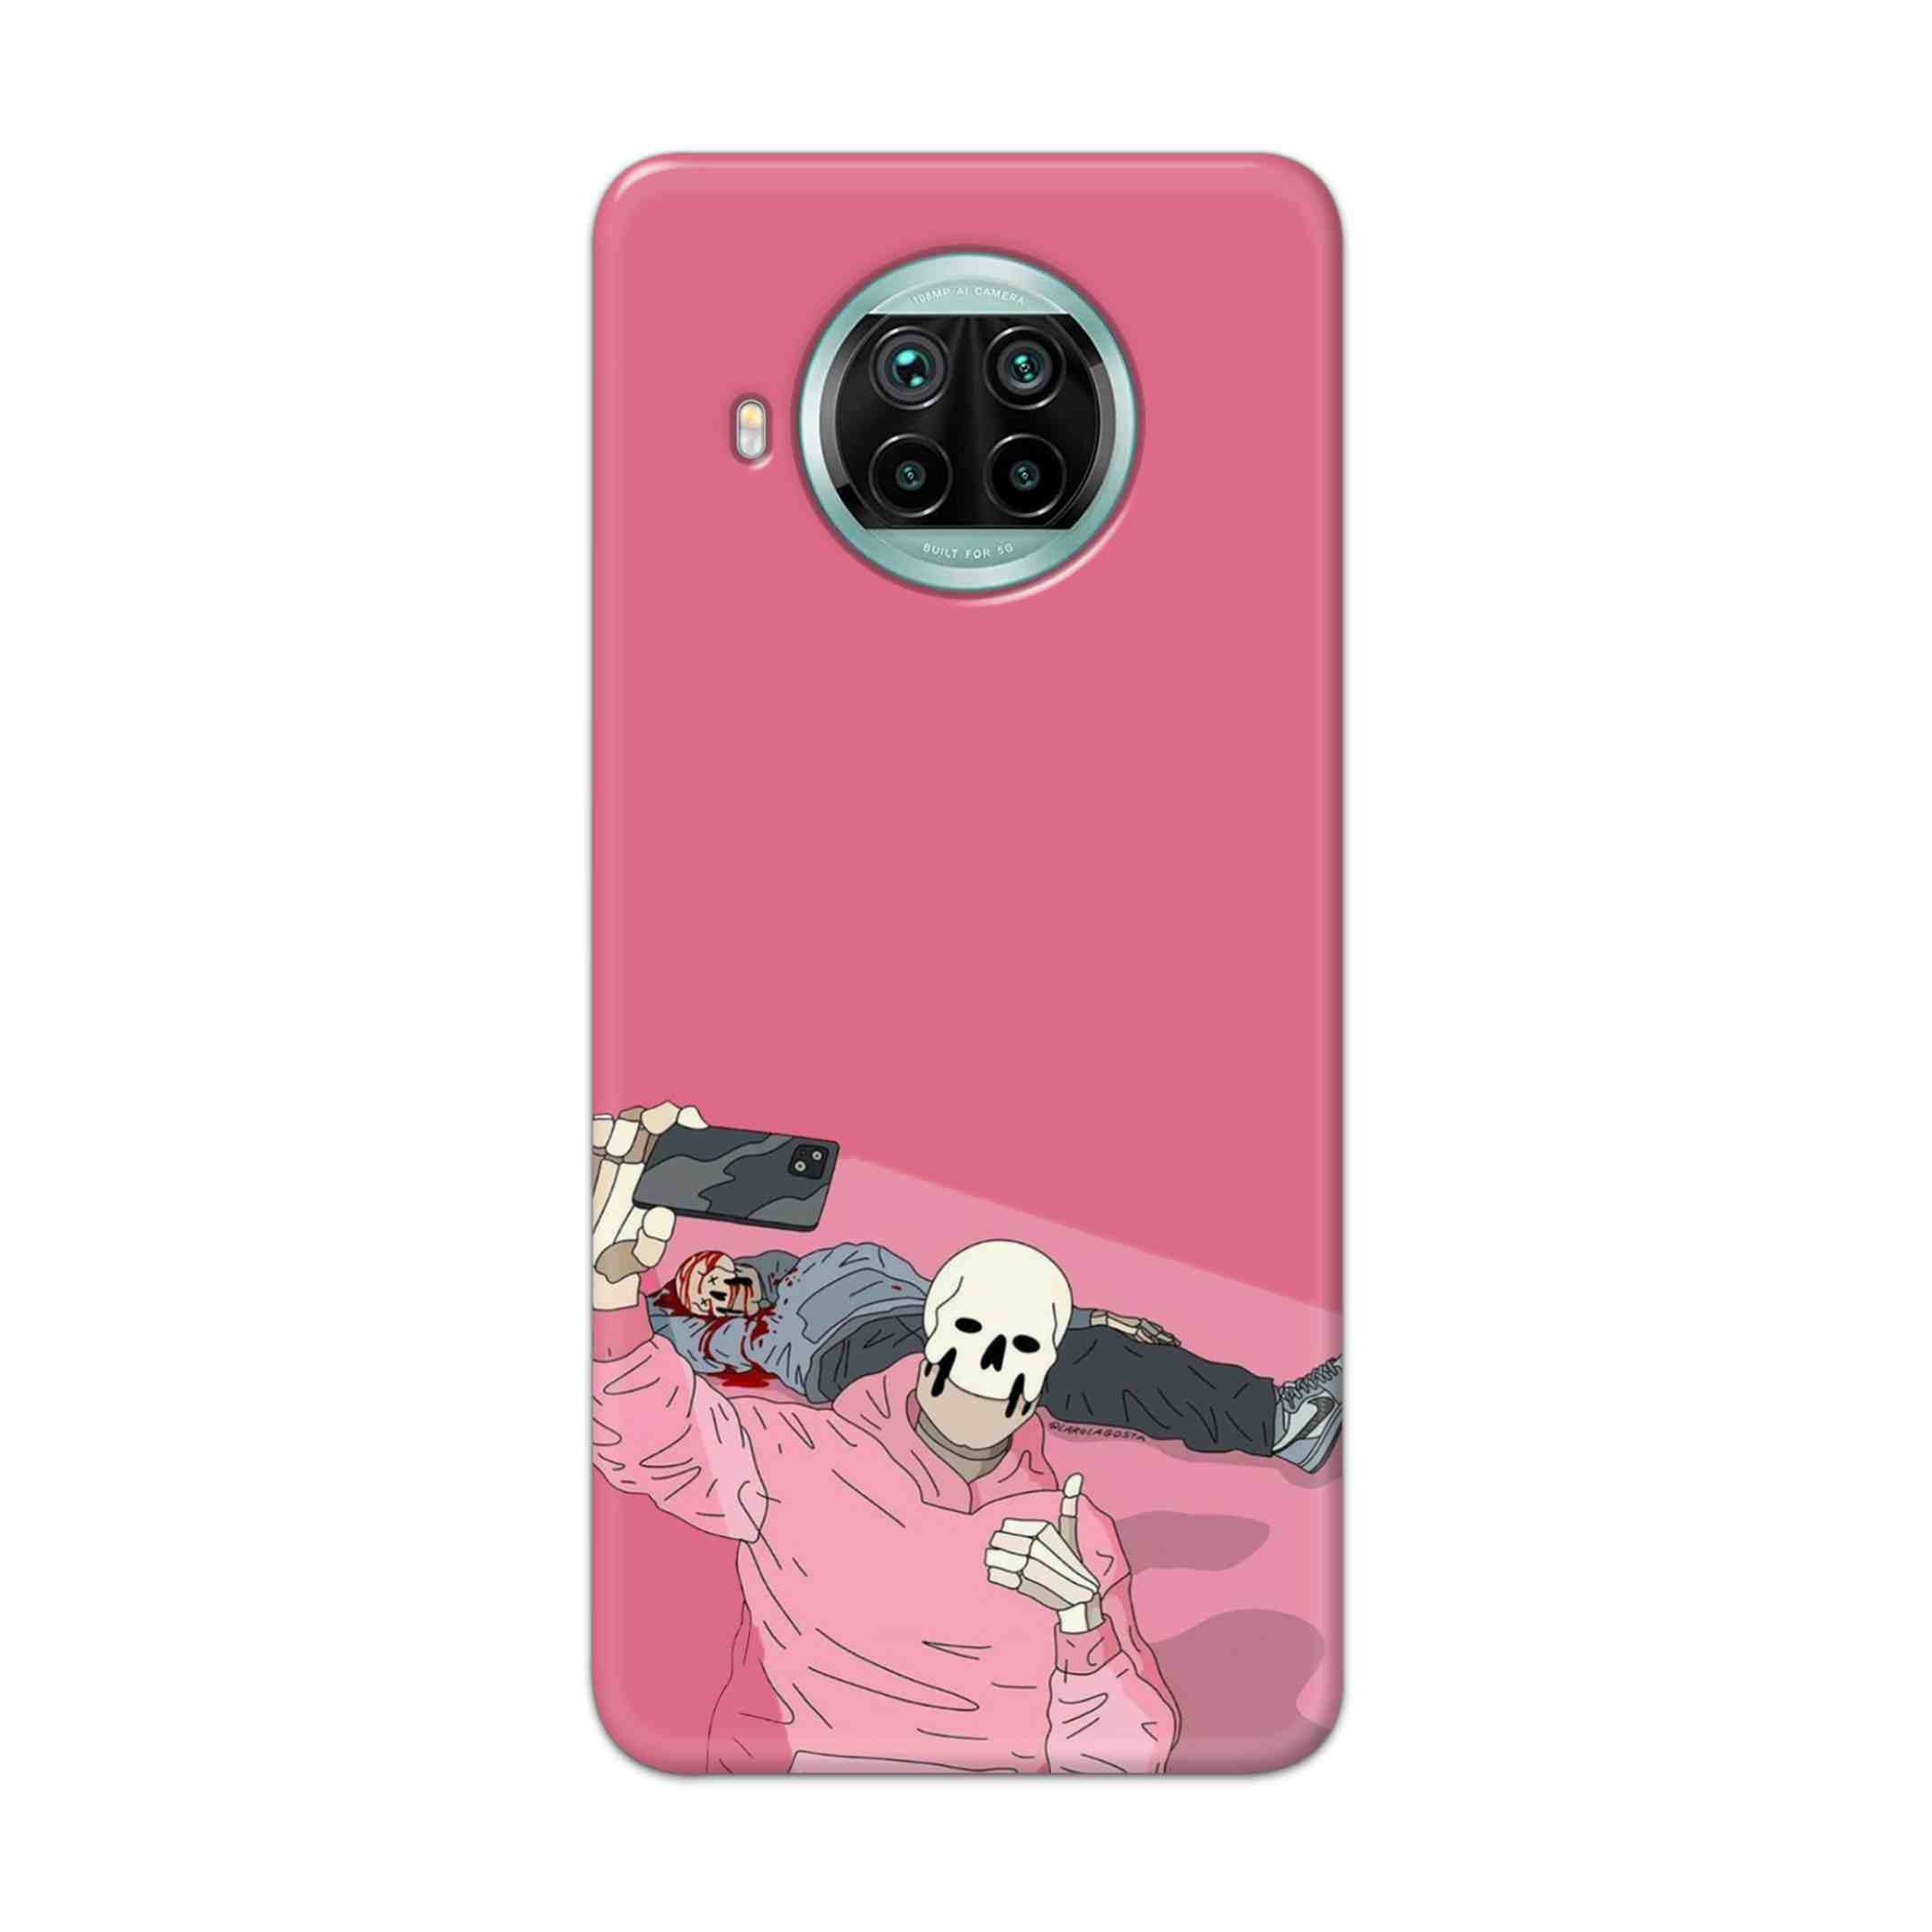 Buy Selfie Hard Back Mobile Phone Case Cover For Xiaomi Mi 10i Online